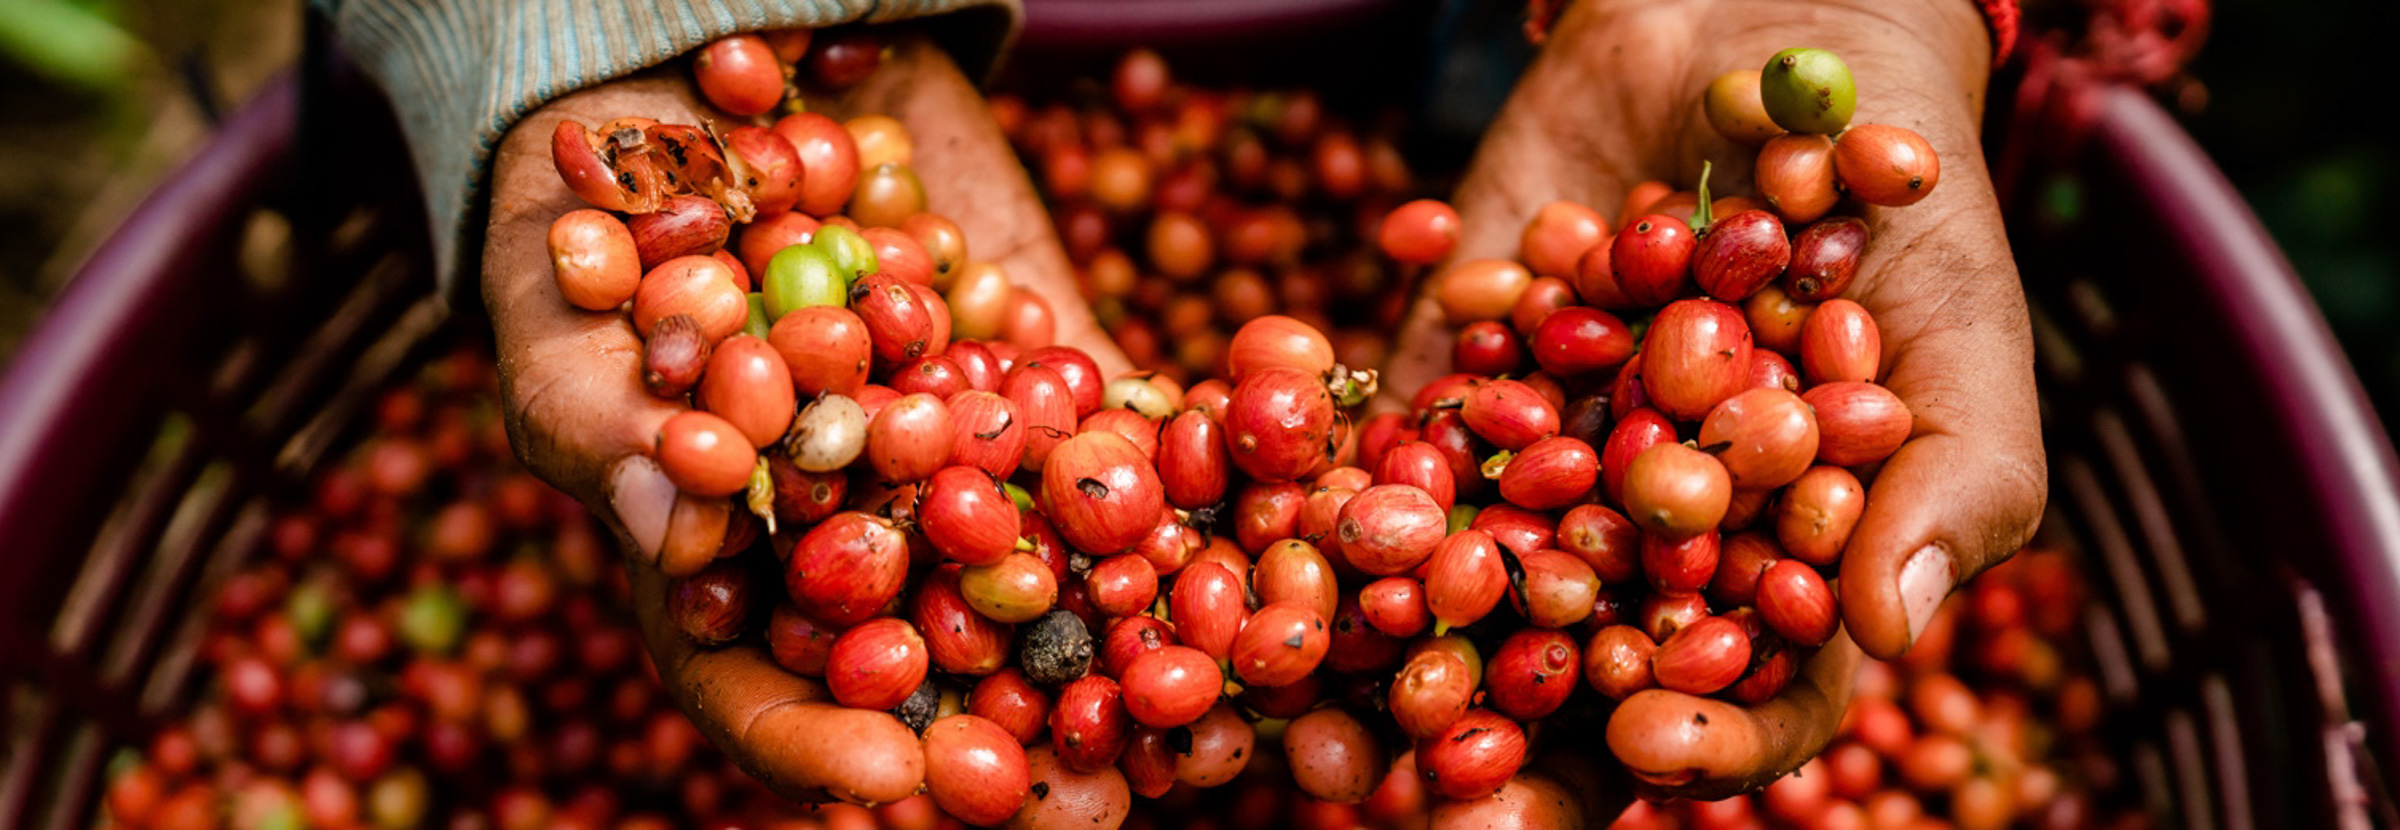 Hands dive into a bucket full of ripe Nicaraguan coffee cherries.